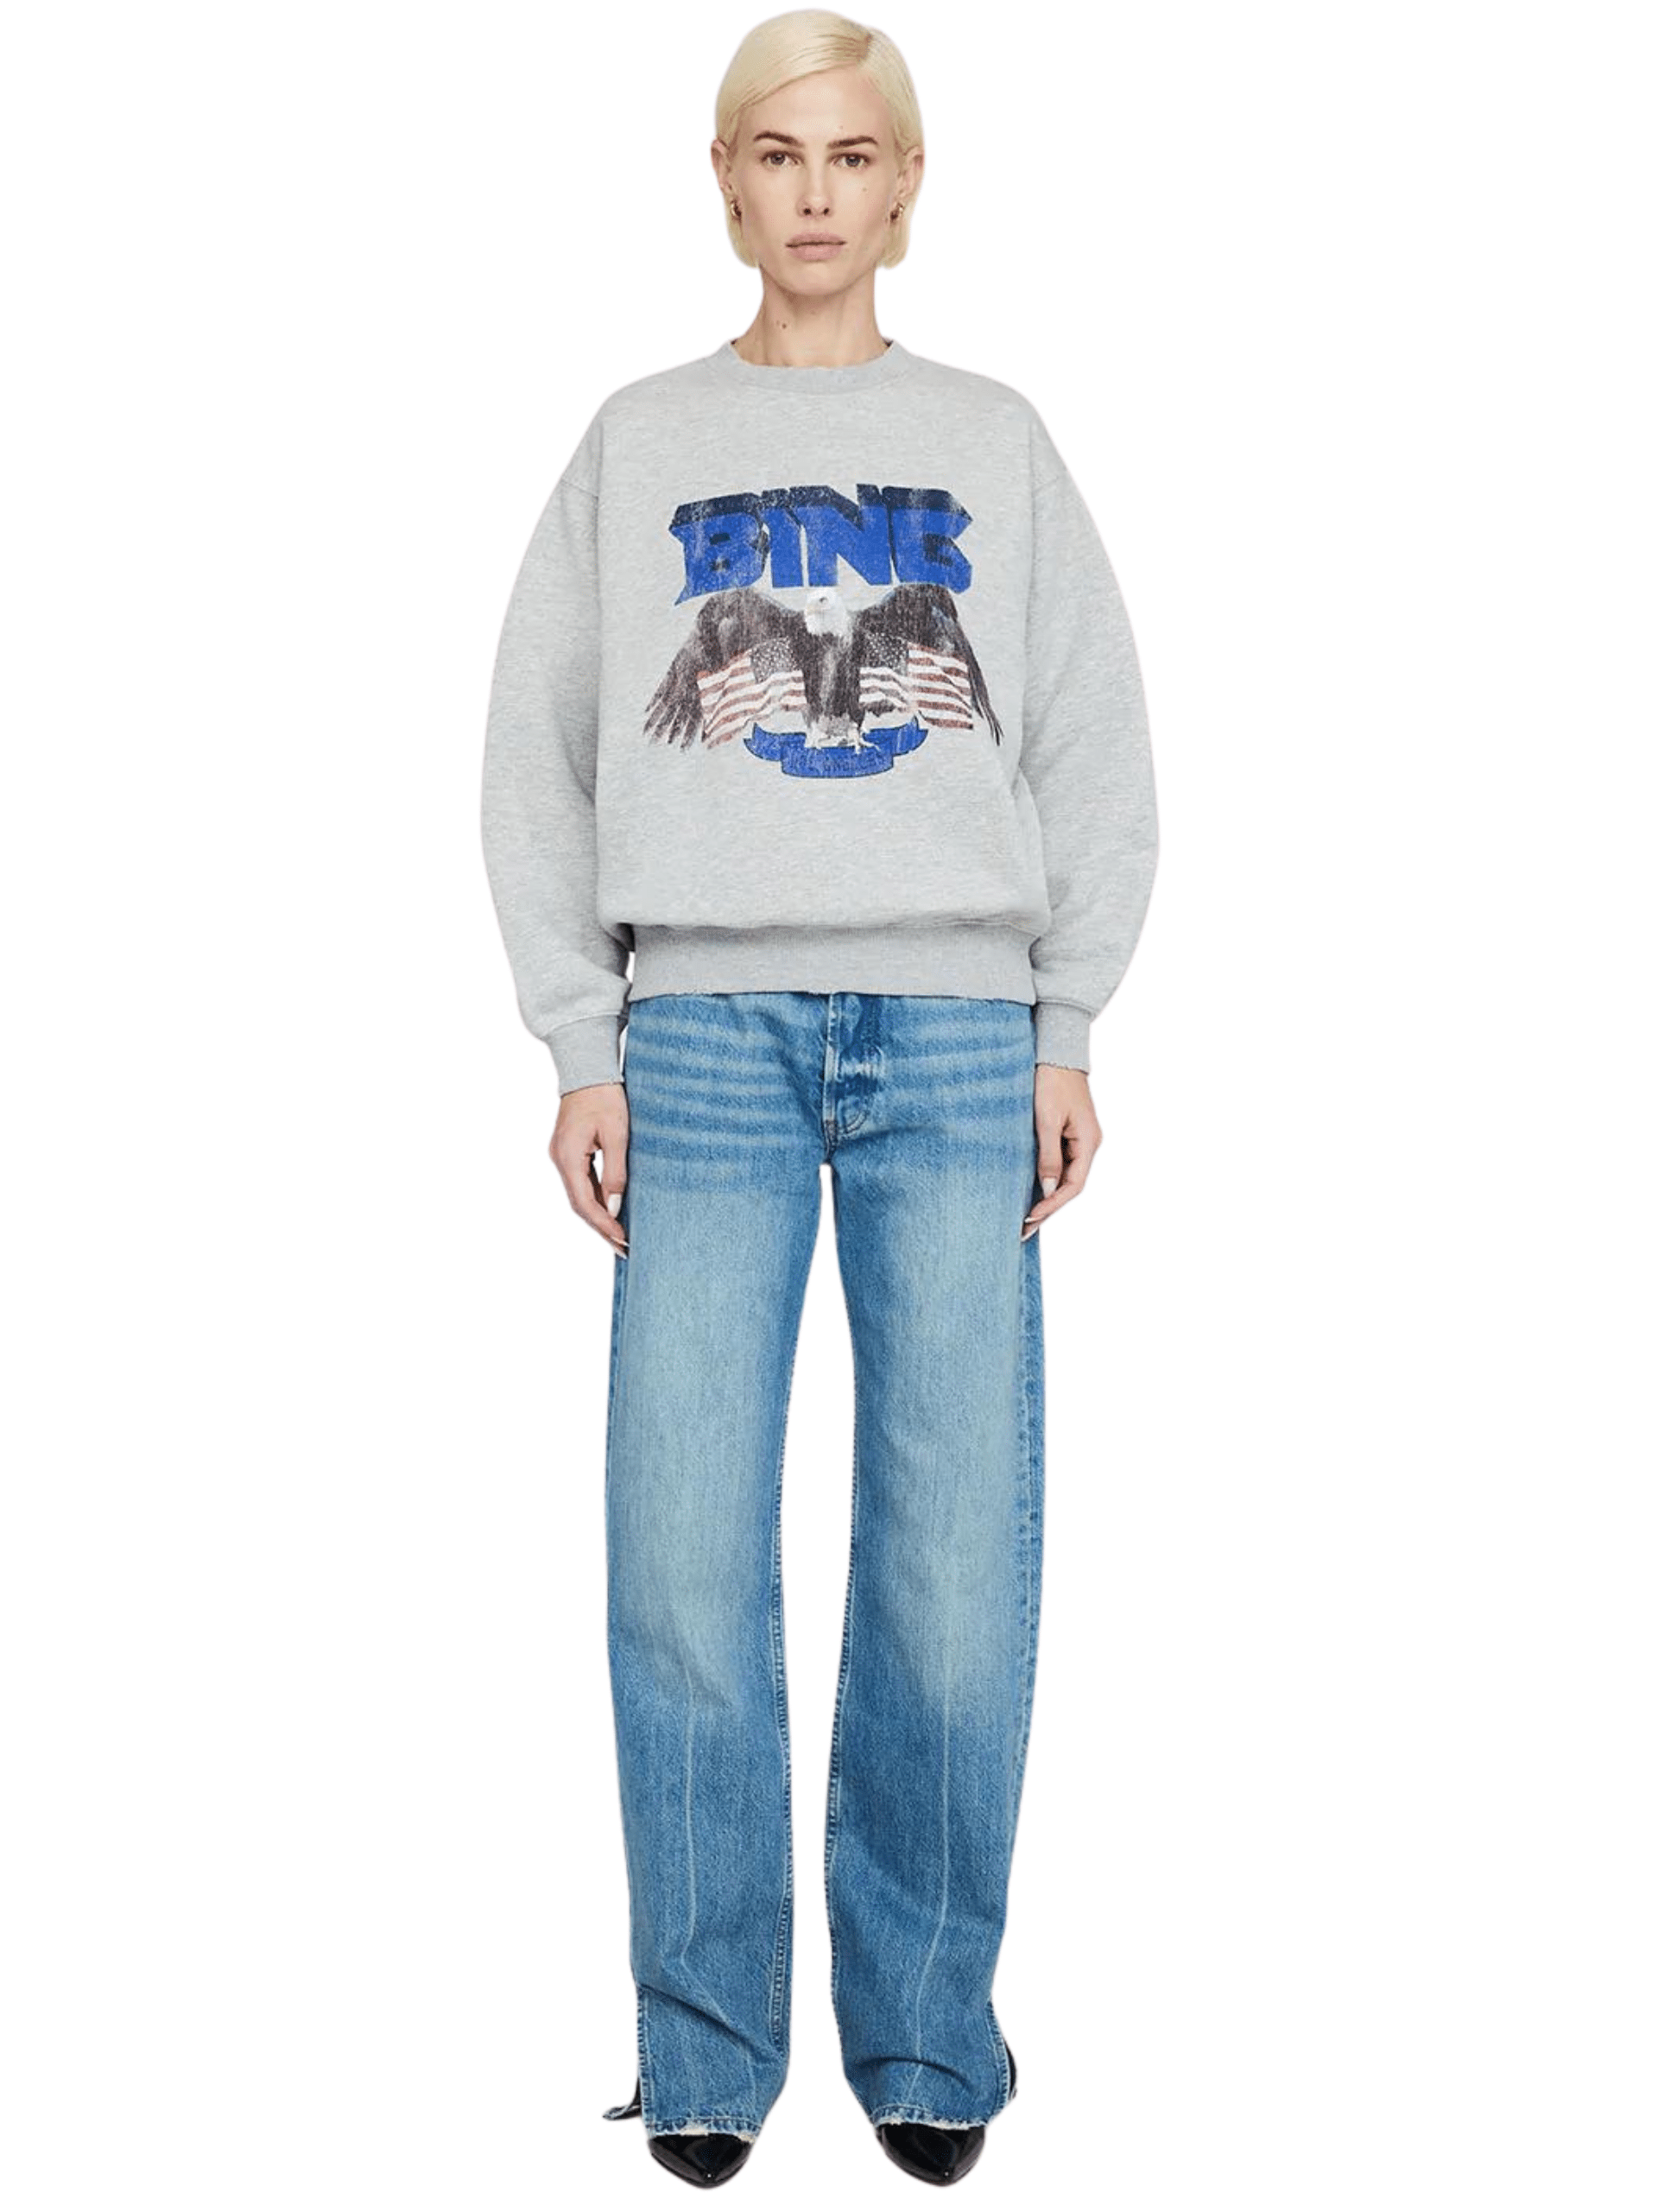 Vintage Bing Sweatshirt / Heather Grey with Blue Womens Anine Bing 